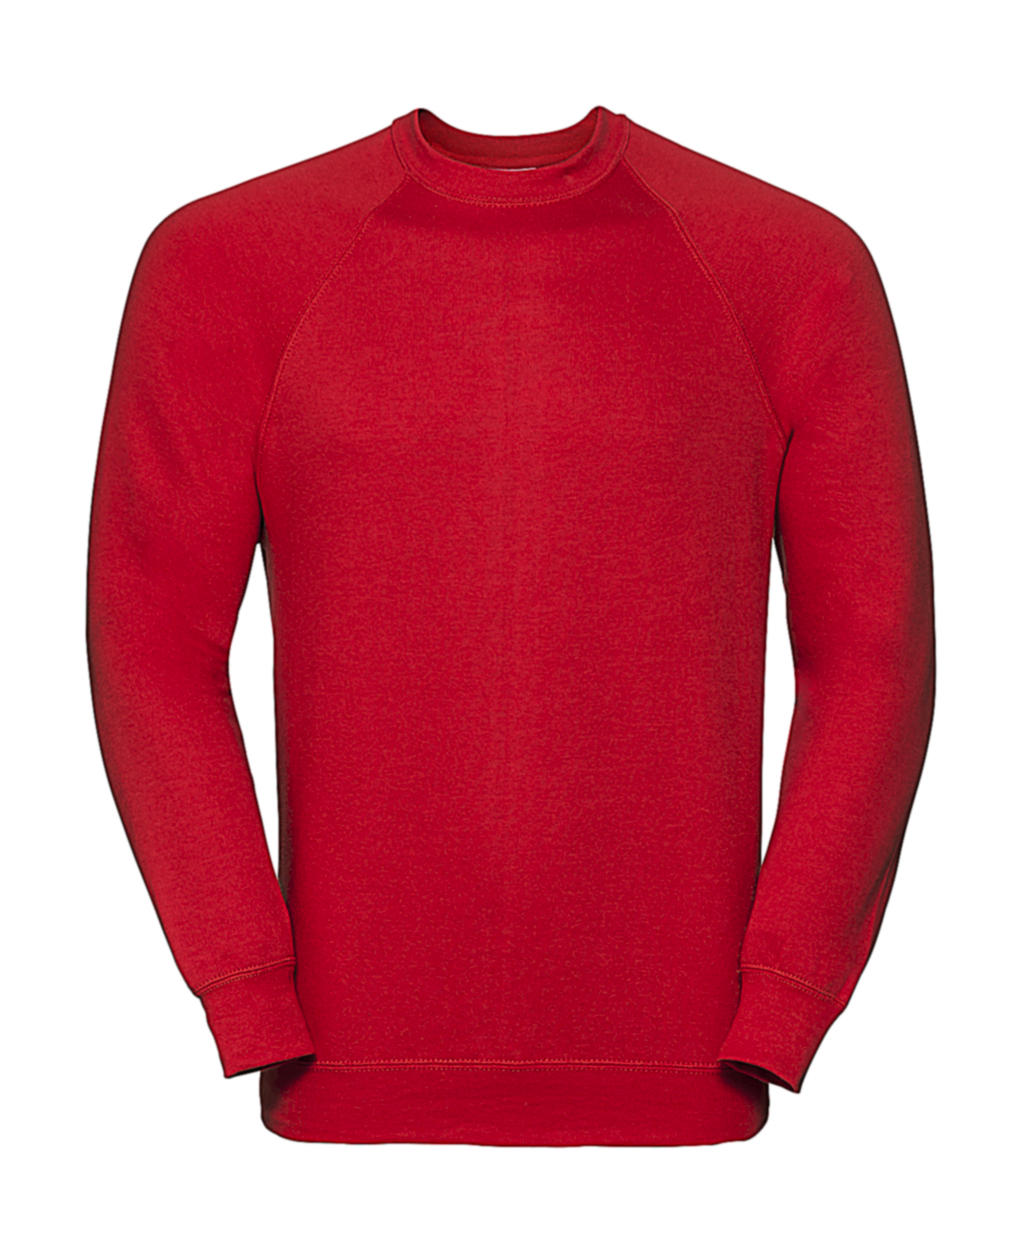  Classic Raglan Sweatshirt in Farbe Bright Red